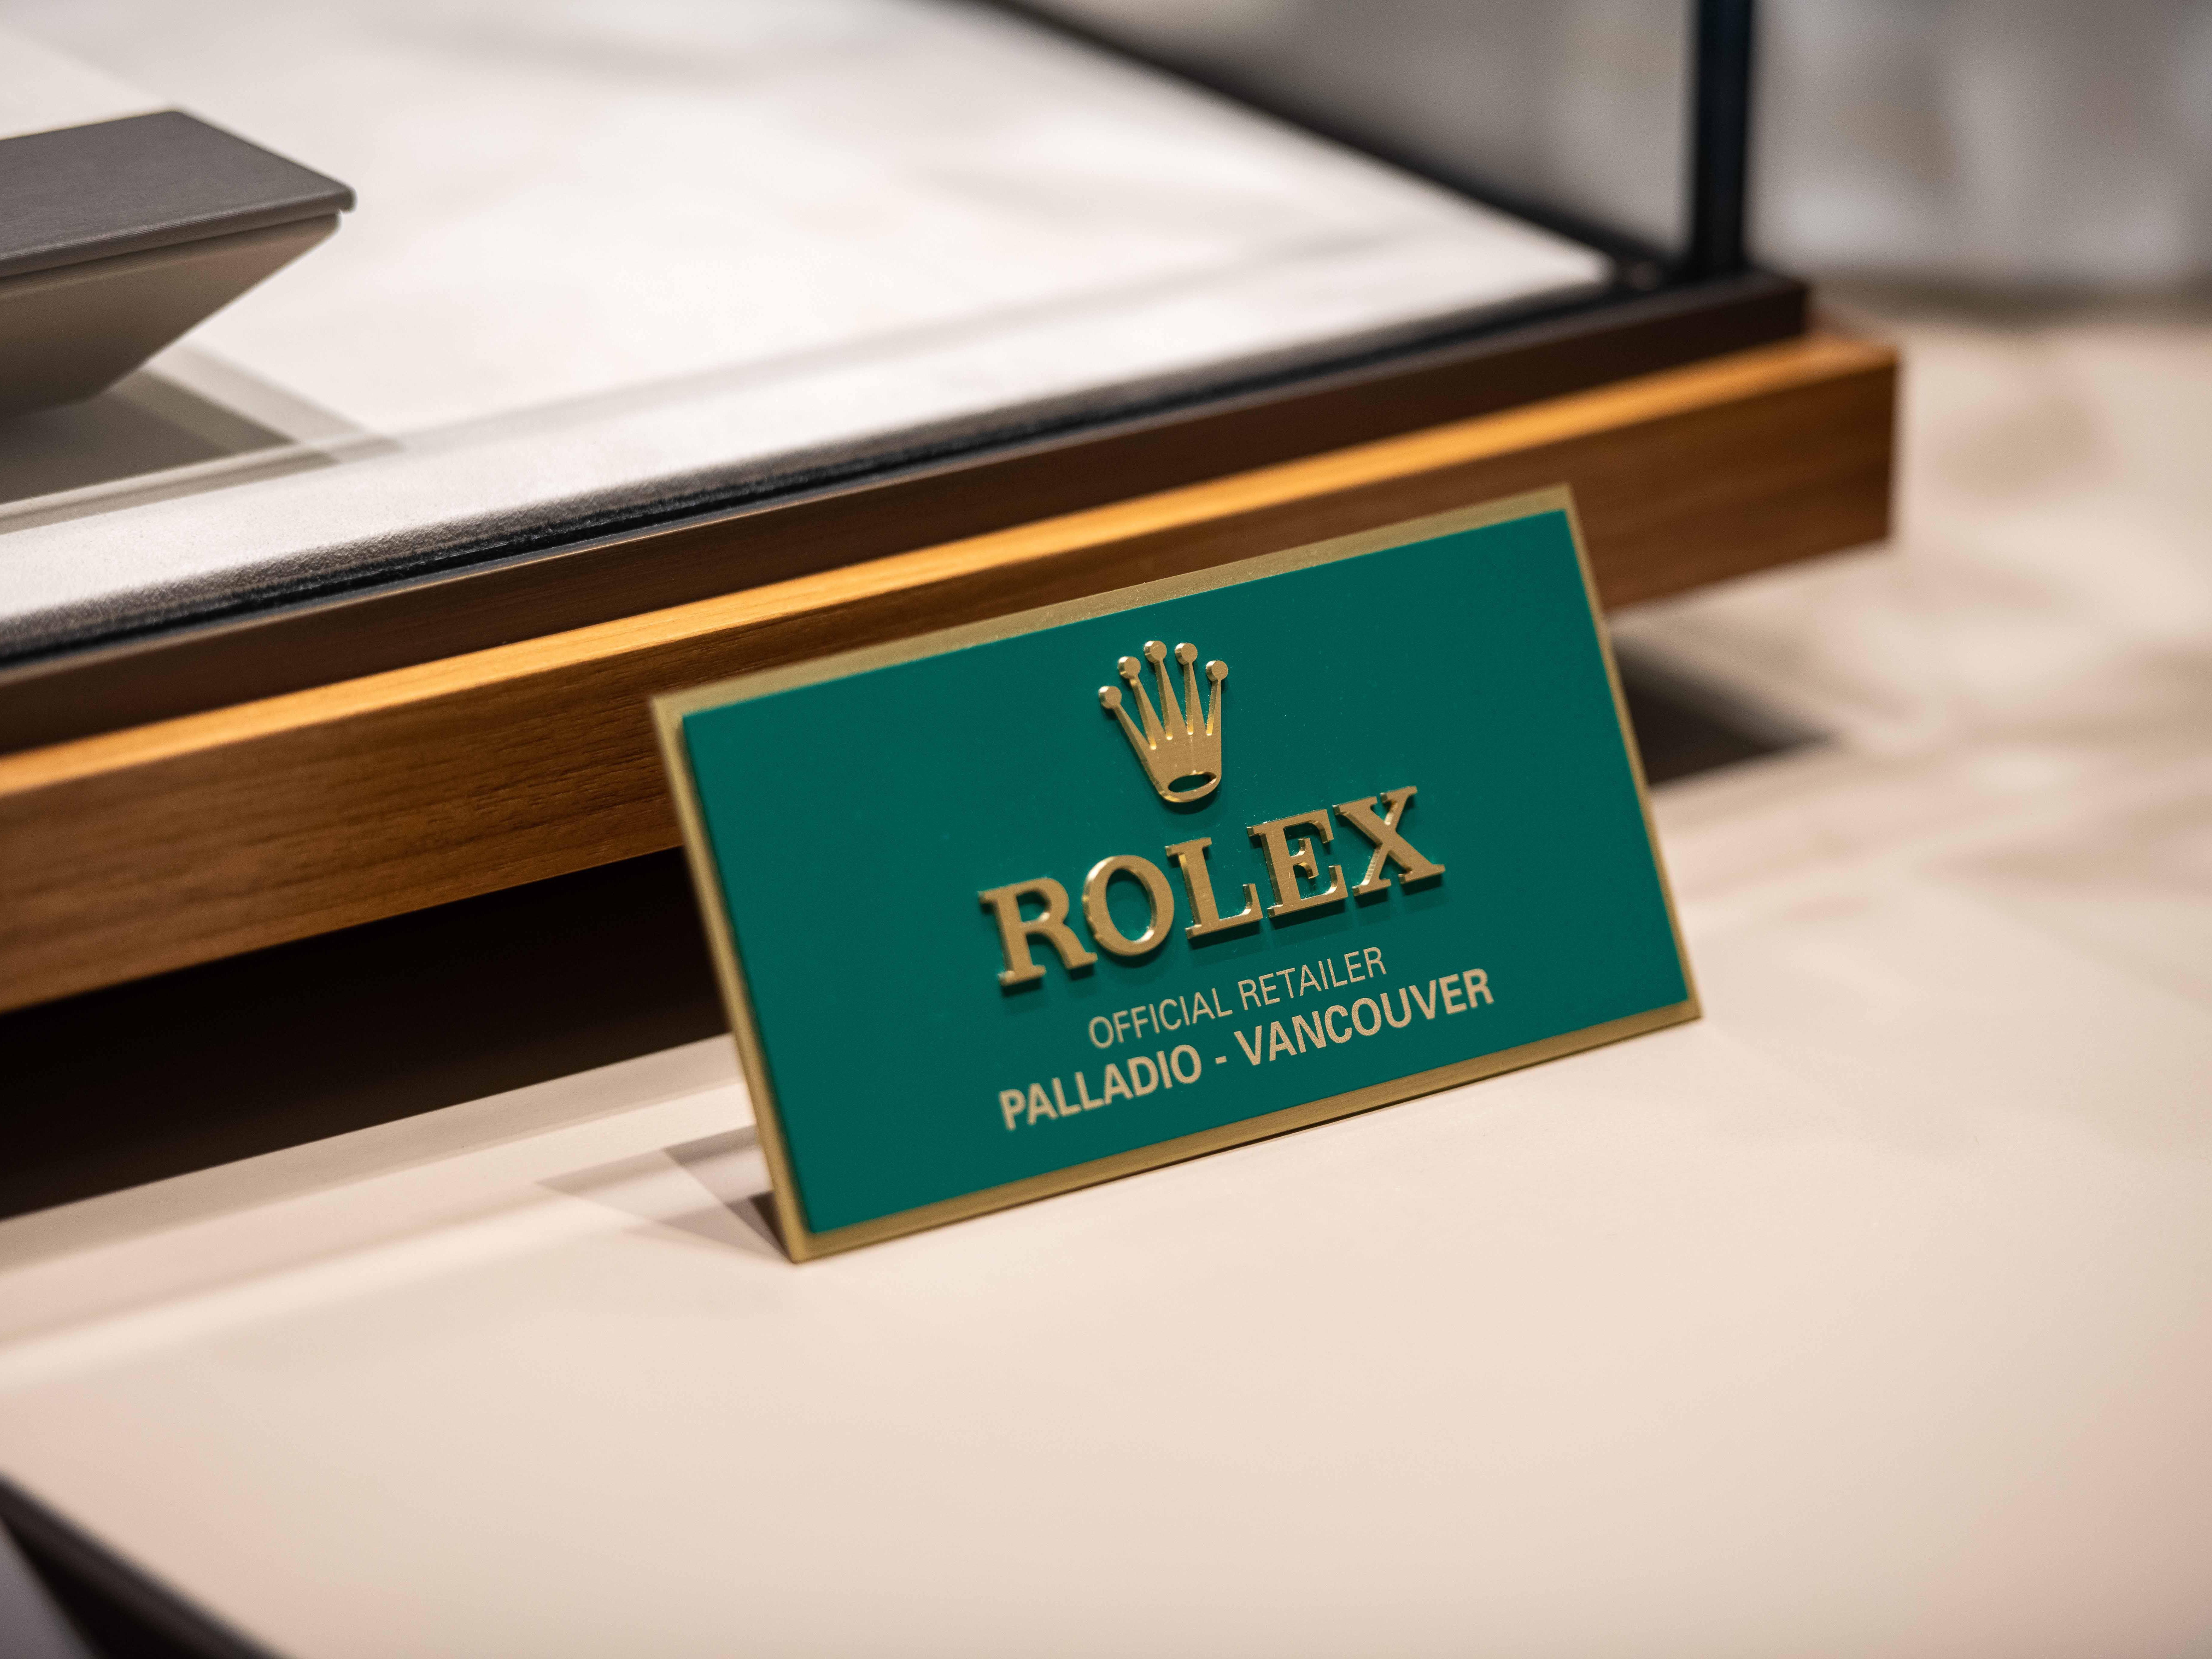 Palladio Jewellers - Official Rolex Retailer in Vancouver. ‭Palladio Jewellers – Official Rolex Retailer Vancouver (604)685-3885